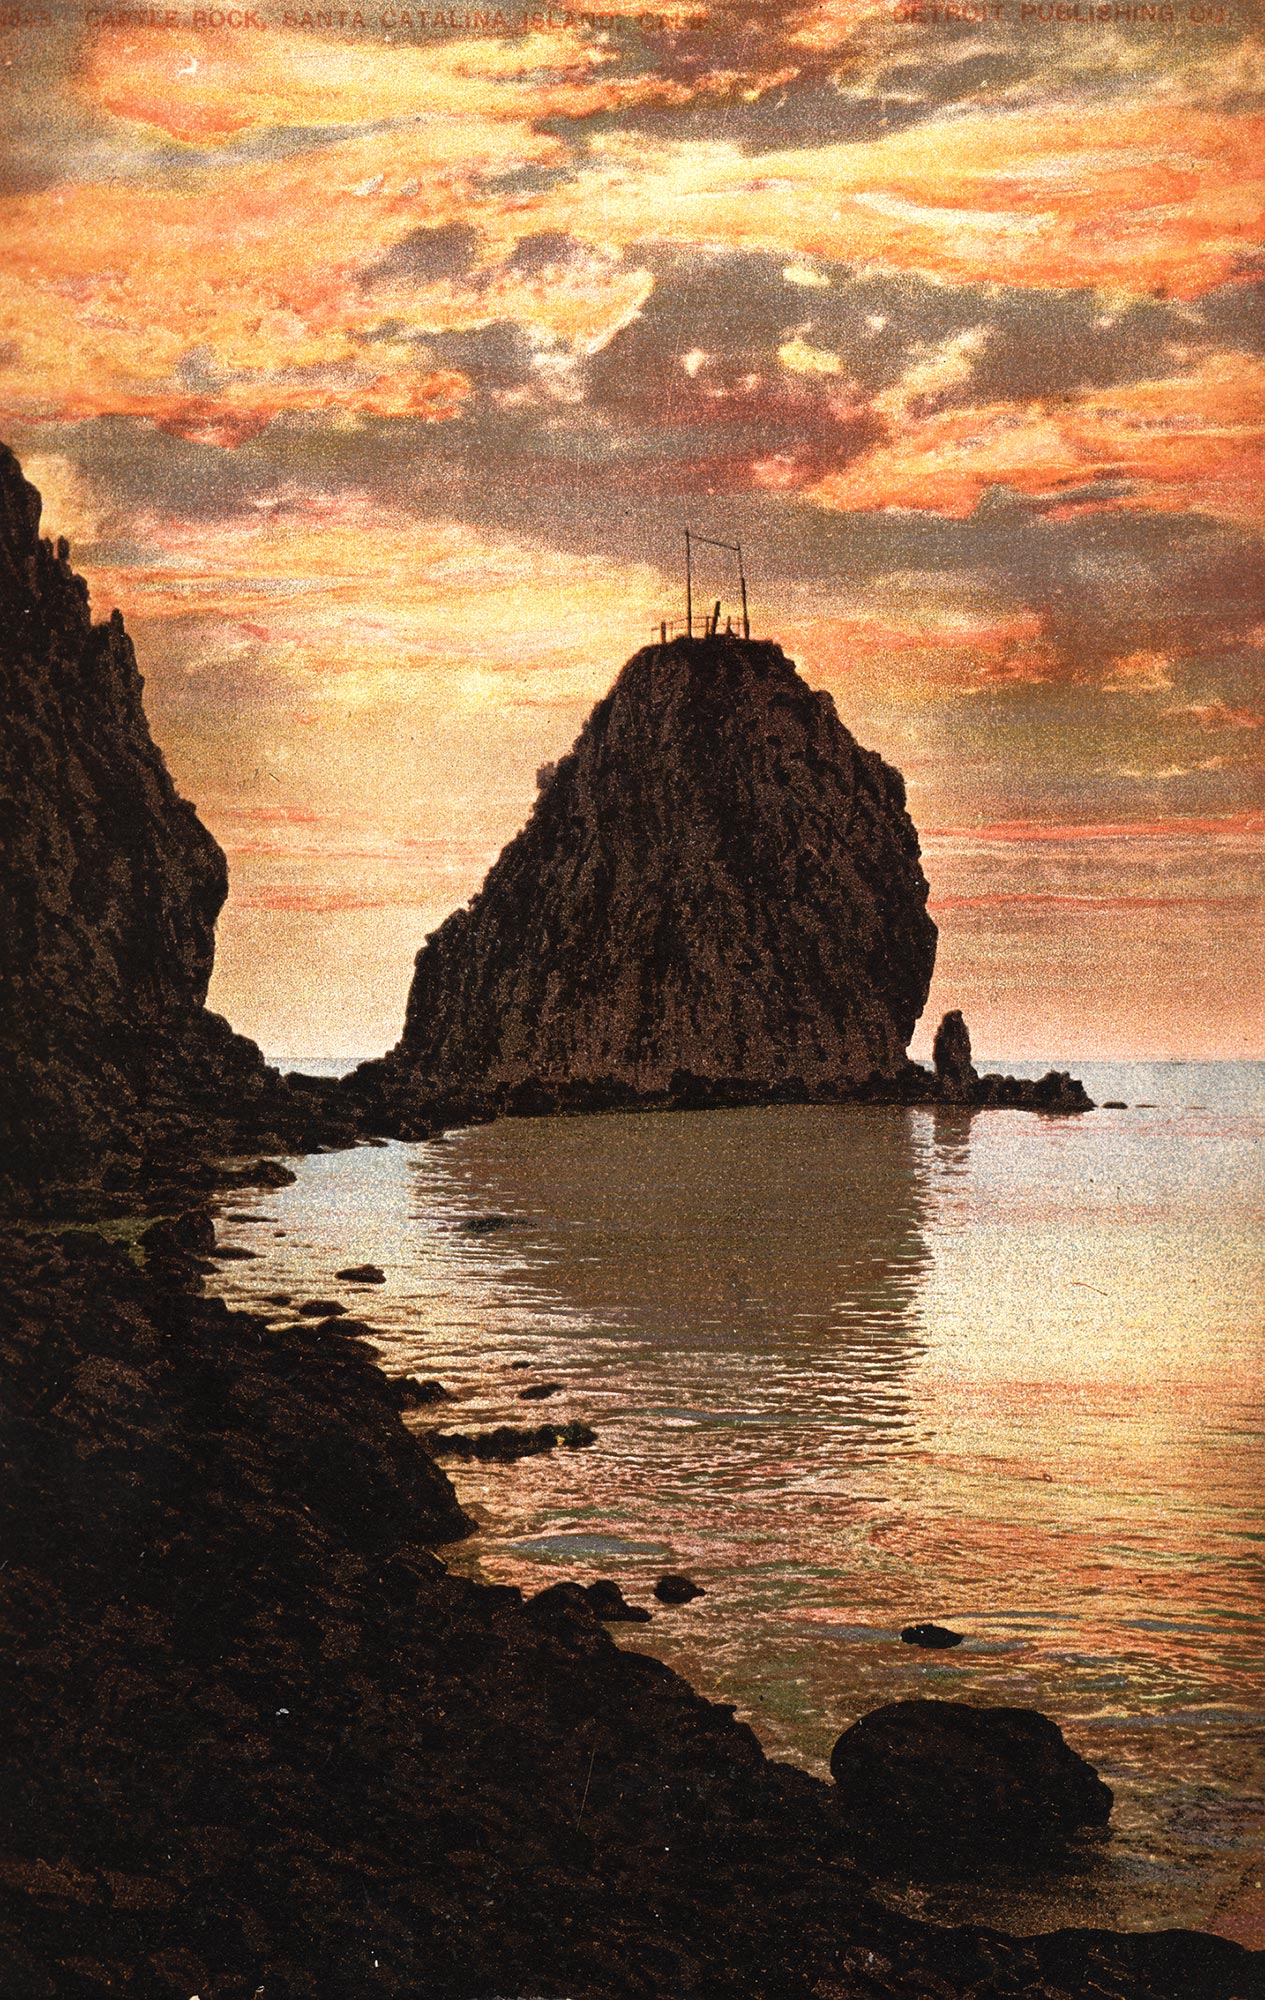 Santa Catalina Rock